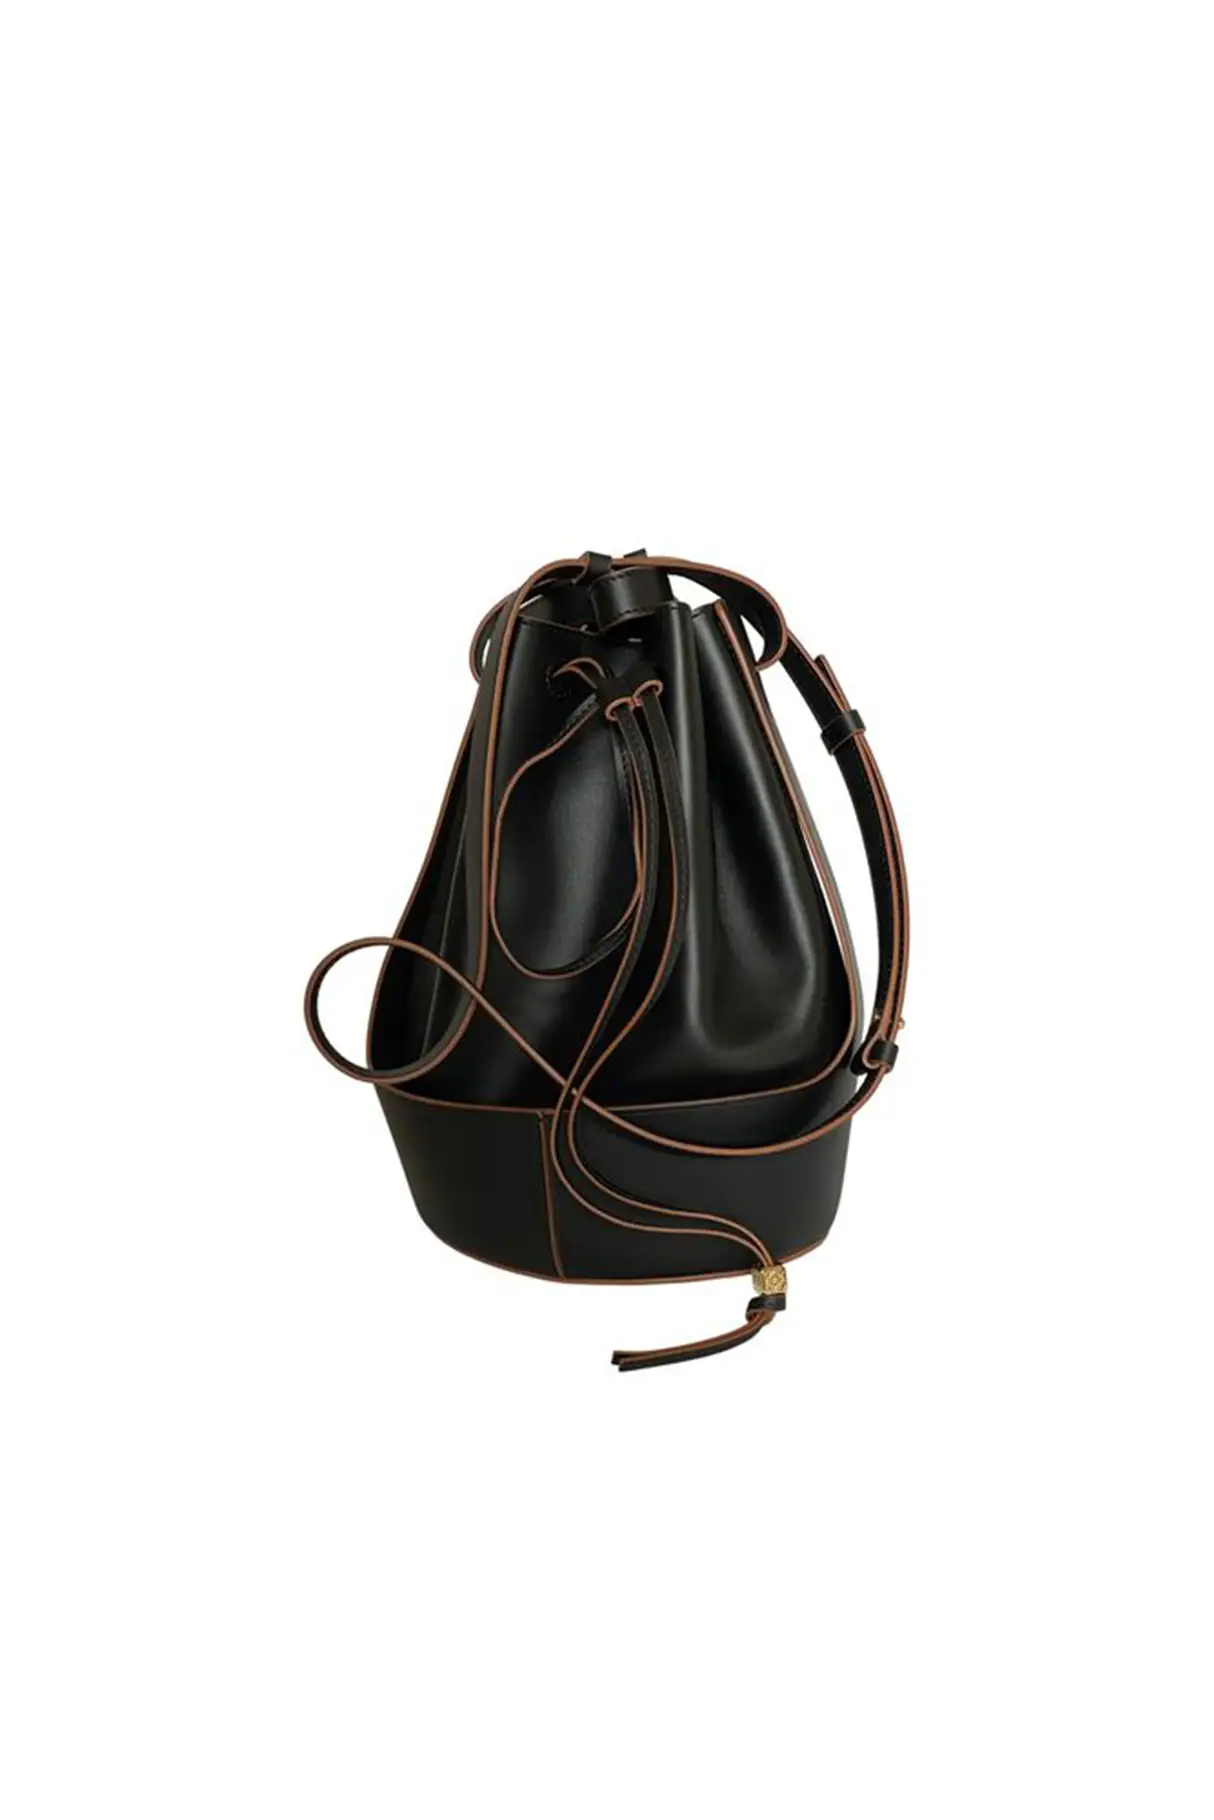 bag-a-main-loewe-balloon-in-black-leather-bucket-bag.jpg